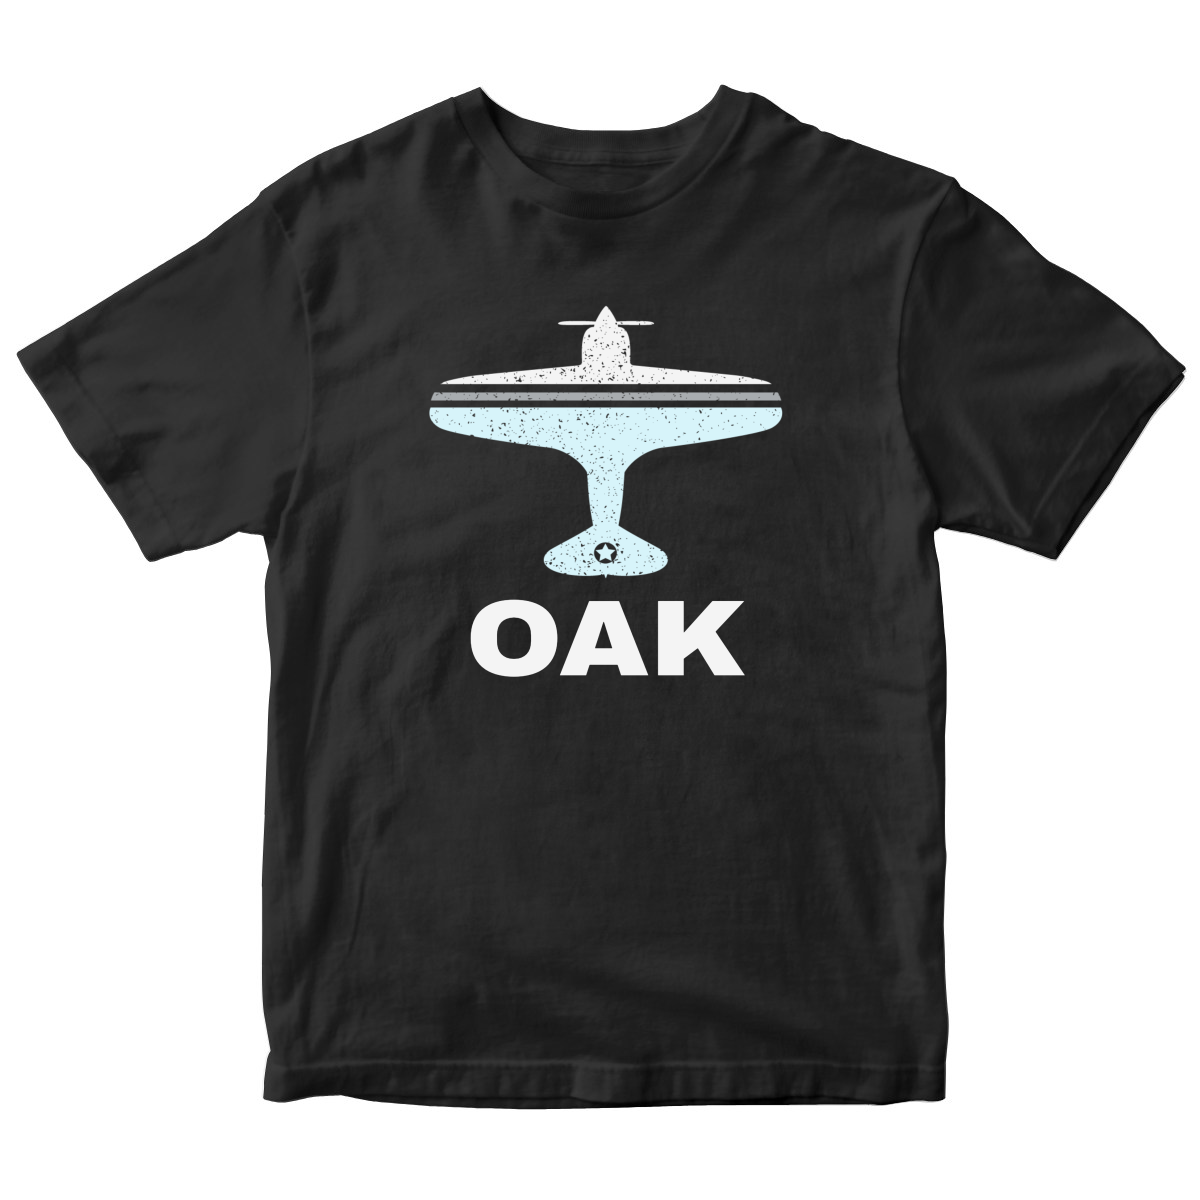 Fly Oakland OAK Airport Kids T-shirt | Black